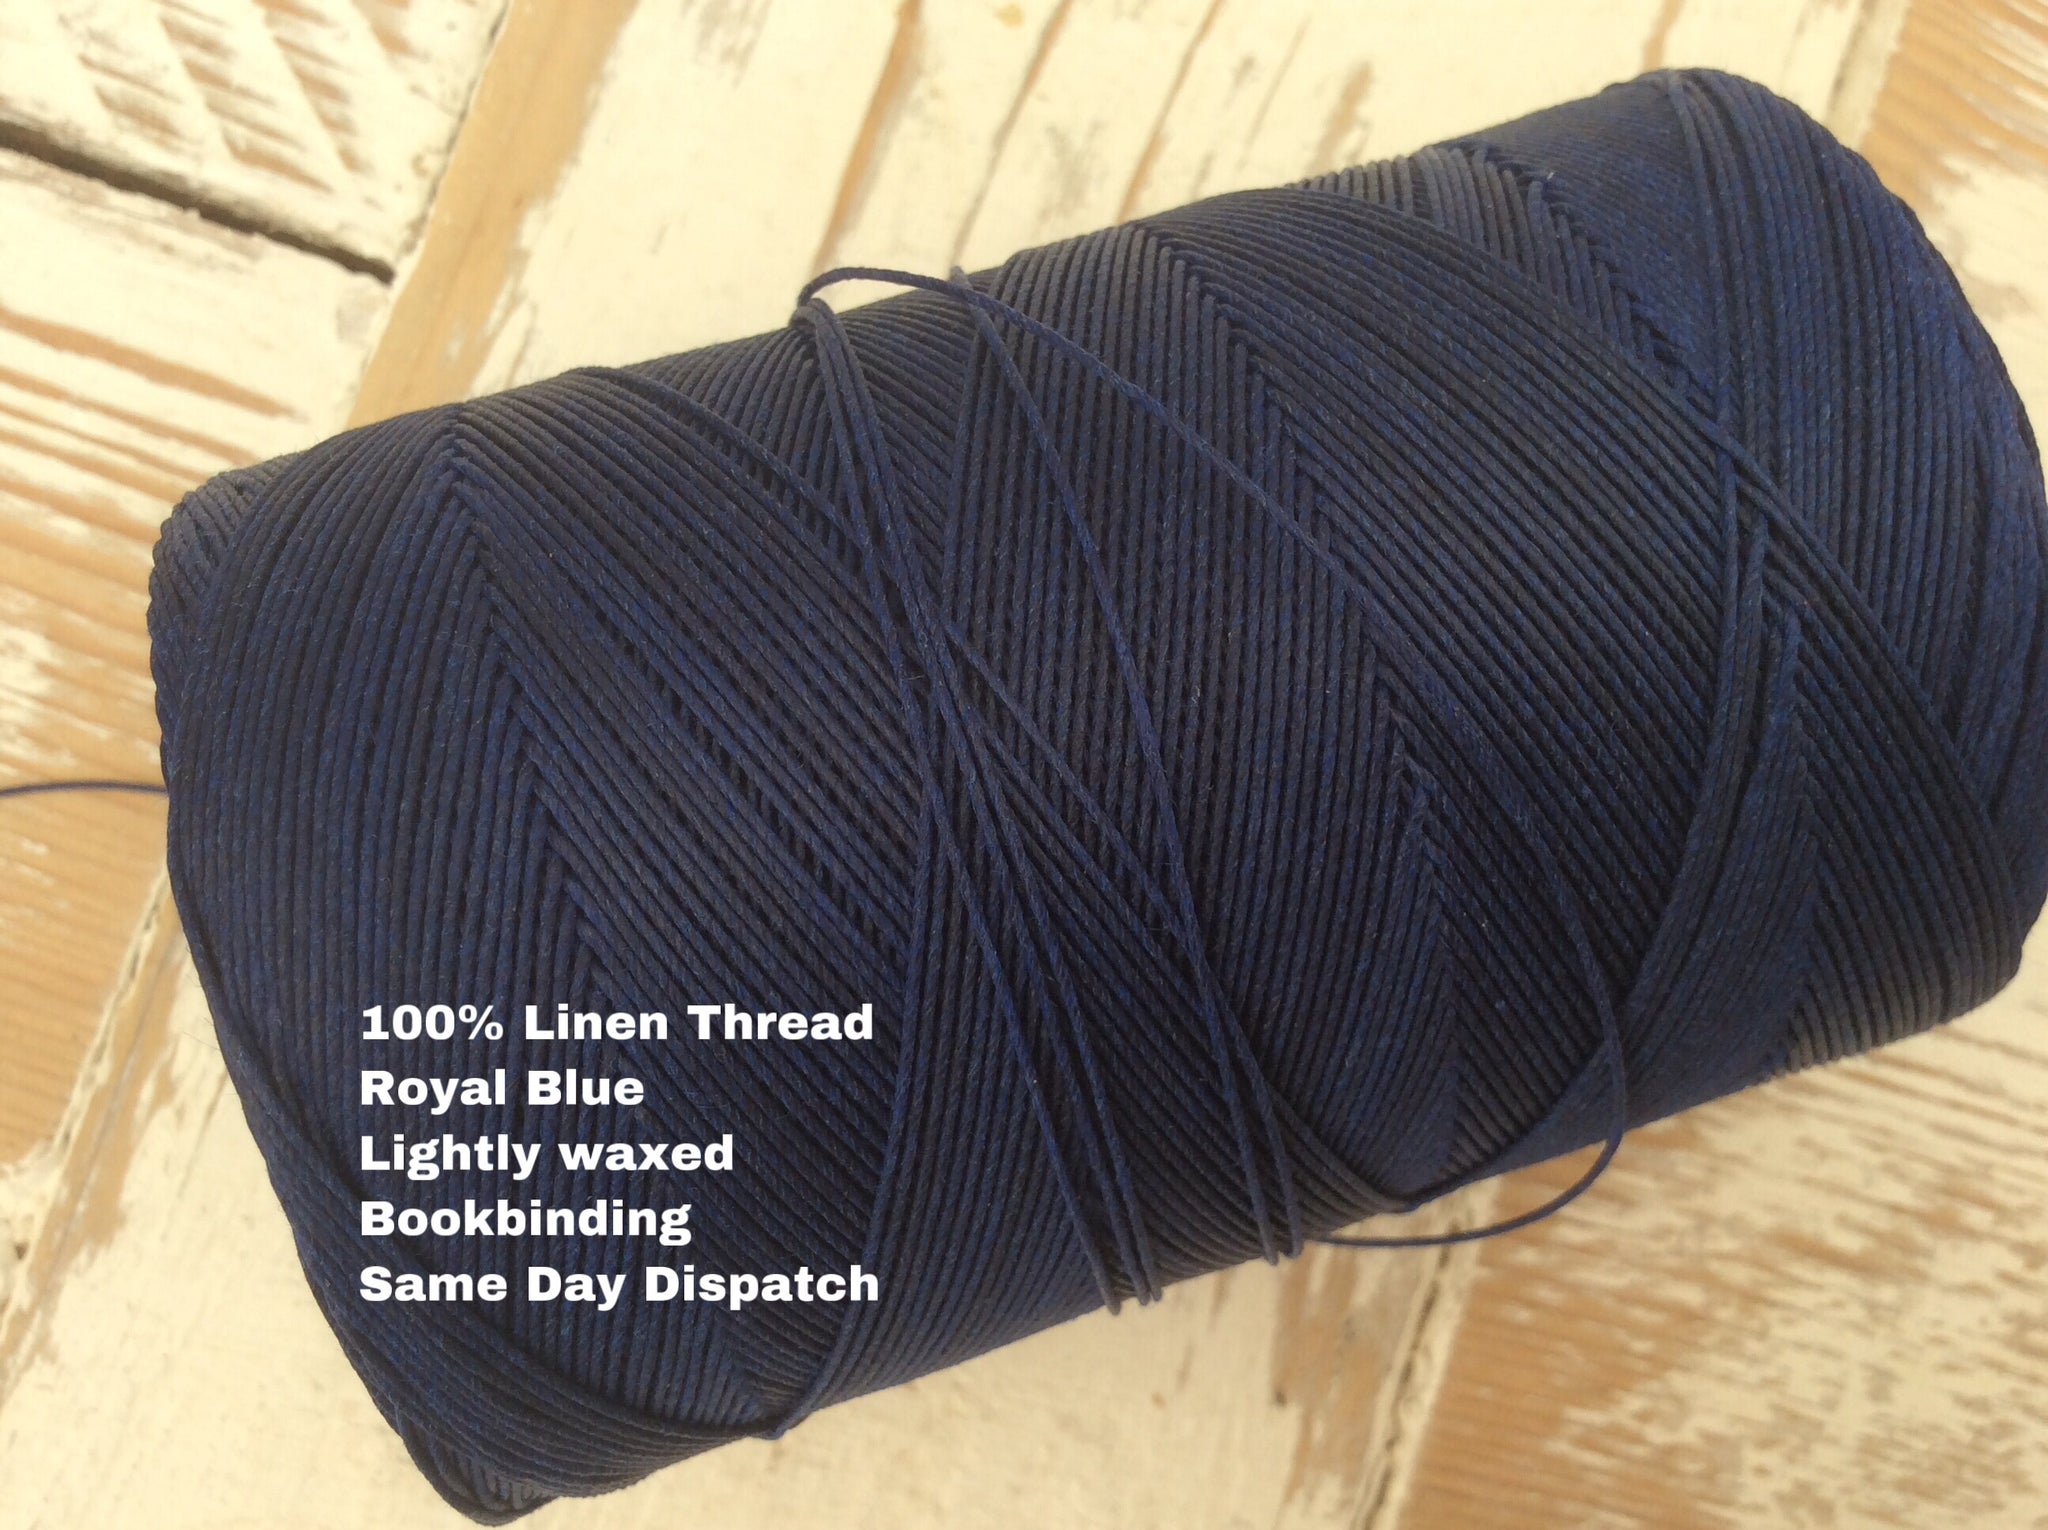 18/3 Linen Thread